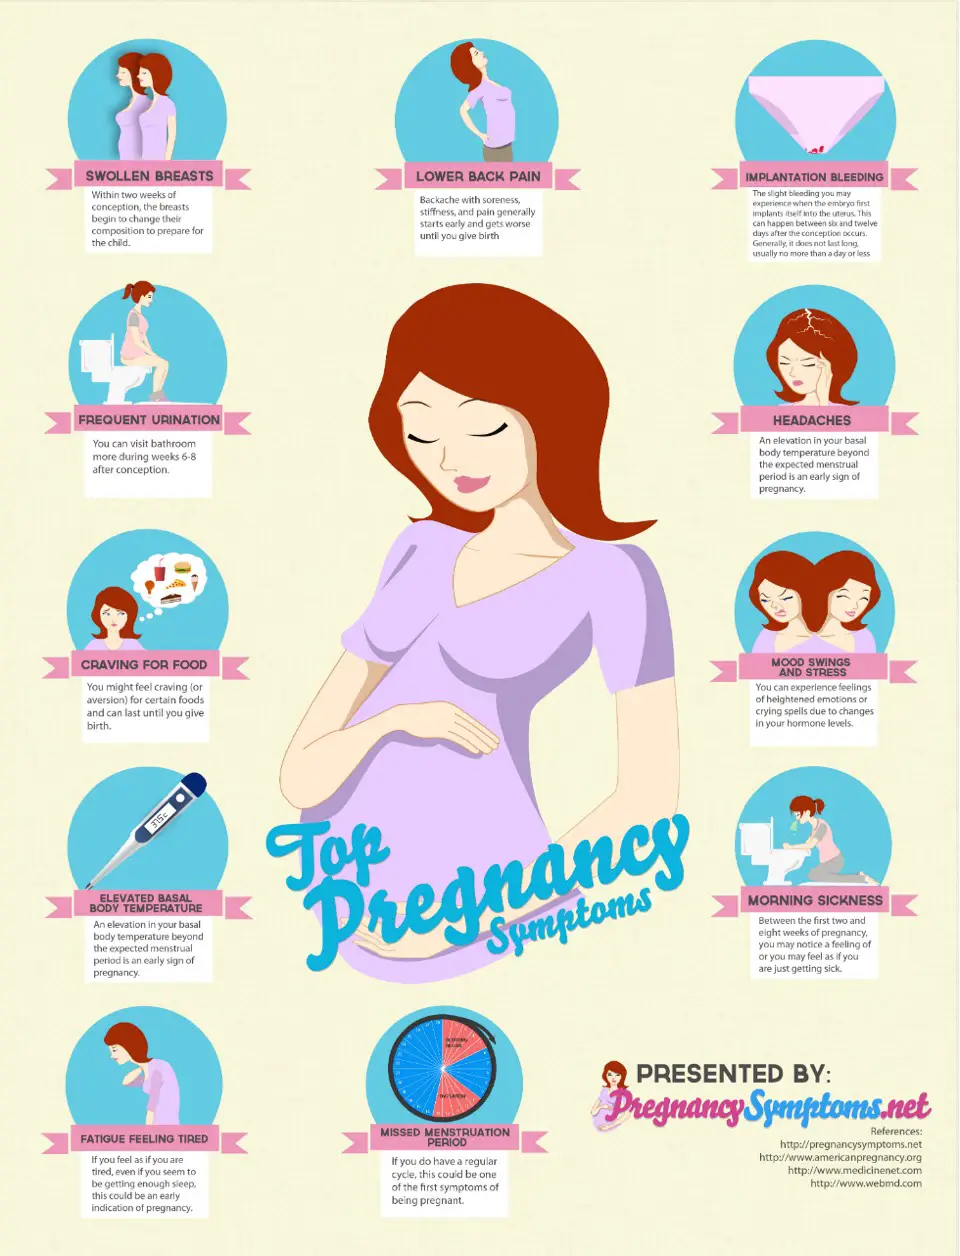 ð¶ð?¼Top 5 Early Symptoms Of Pregnancy